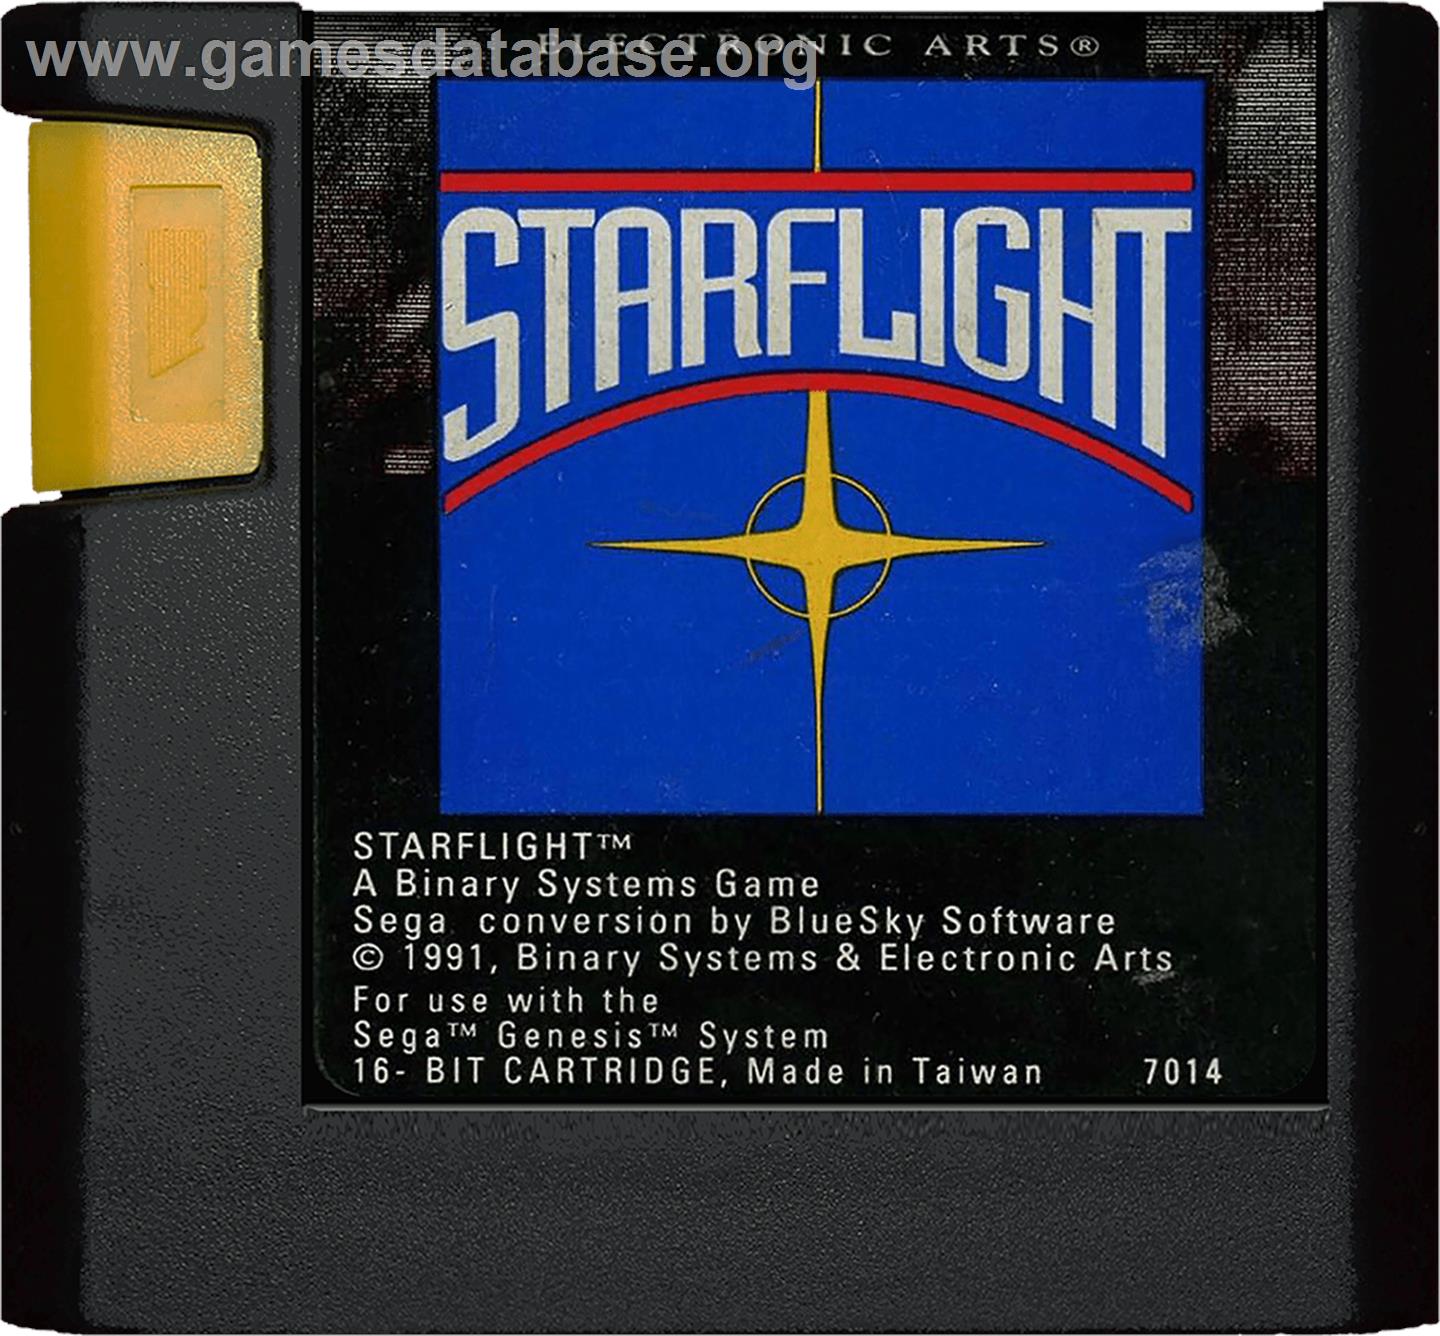 Starflight - Sega Genesis - Artwork - Cartridge